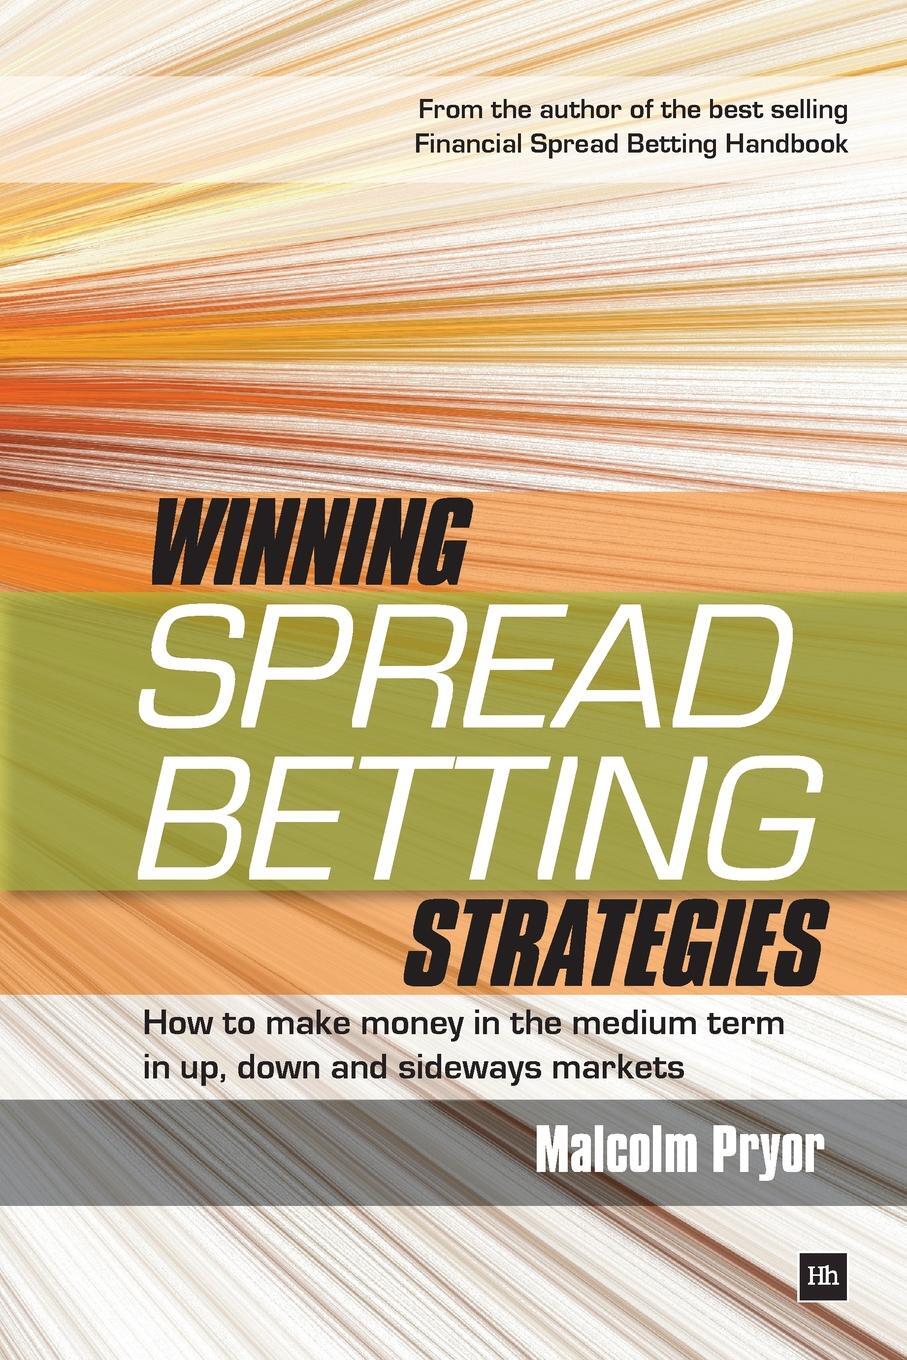 financial spread betting handbook pdf